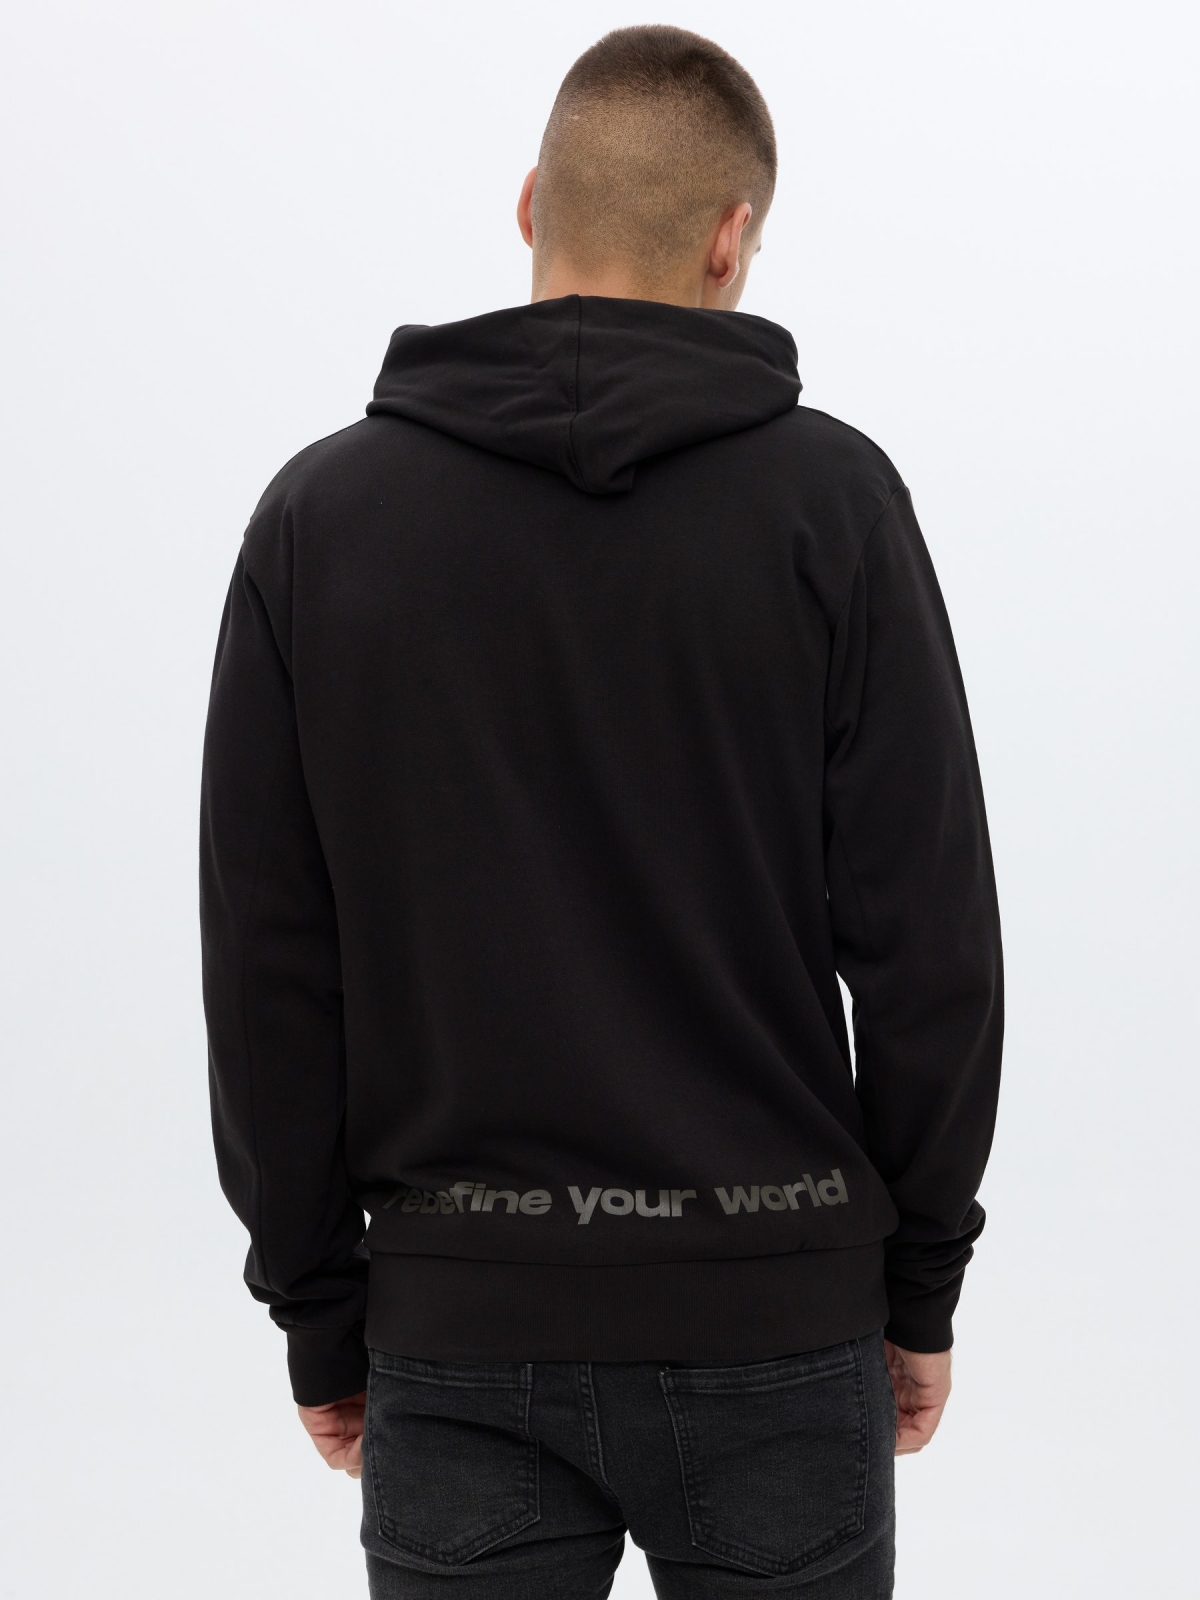 Zipper hooded sweatshirt black middle back view